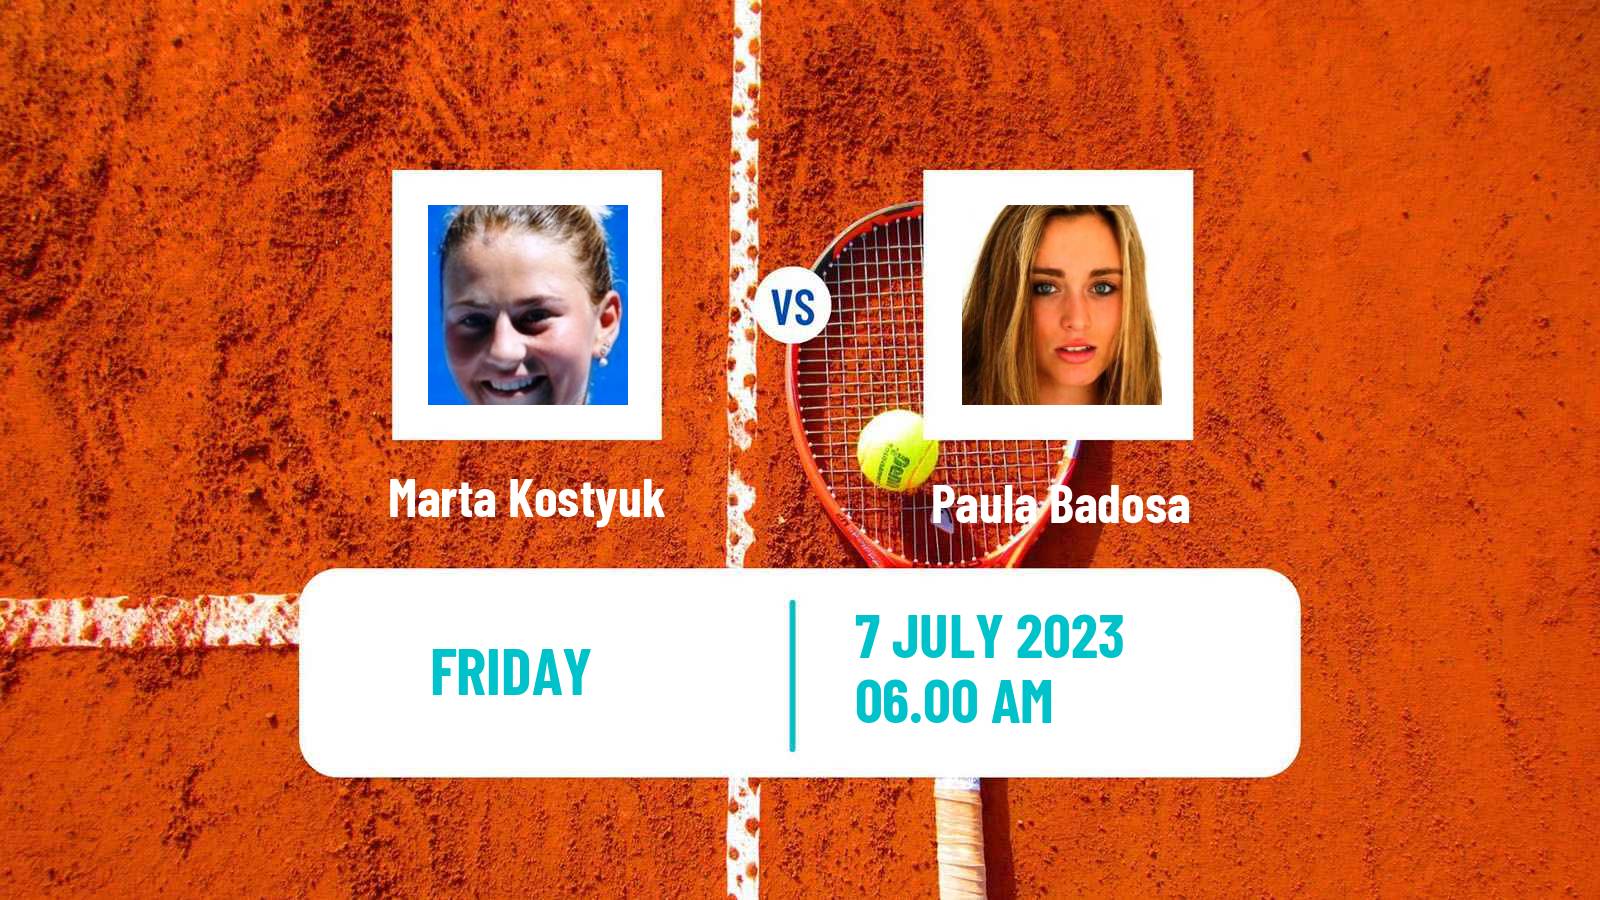 Tennis WTA Wimbledon Marta Kostyuk - Paula Badosa